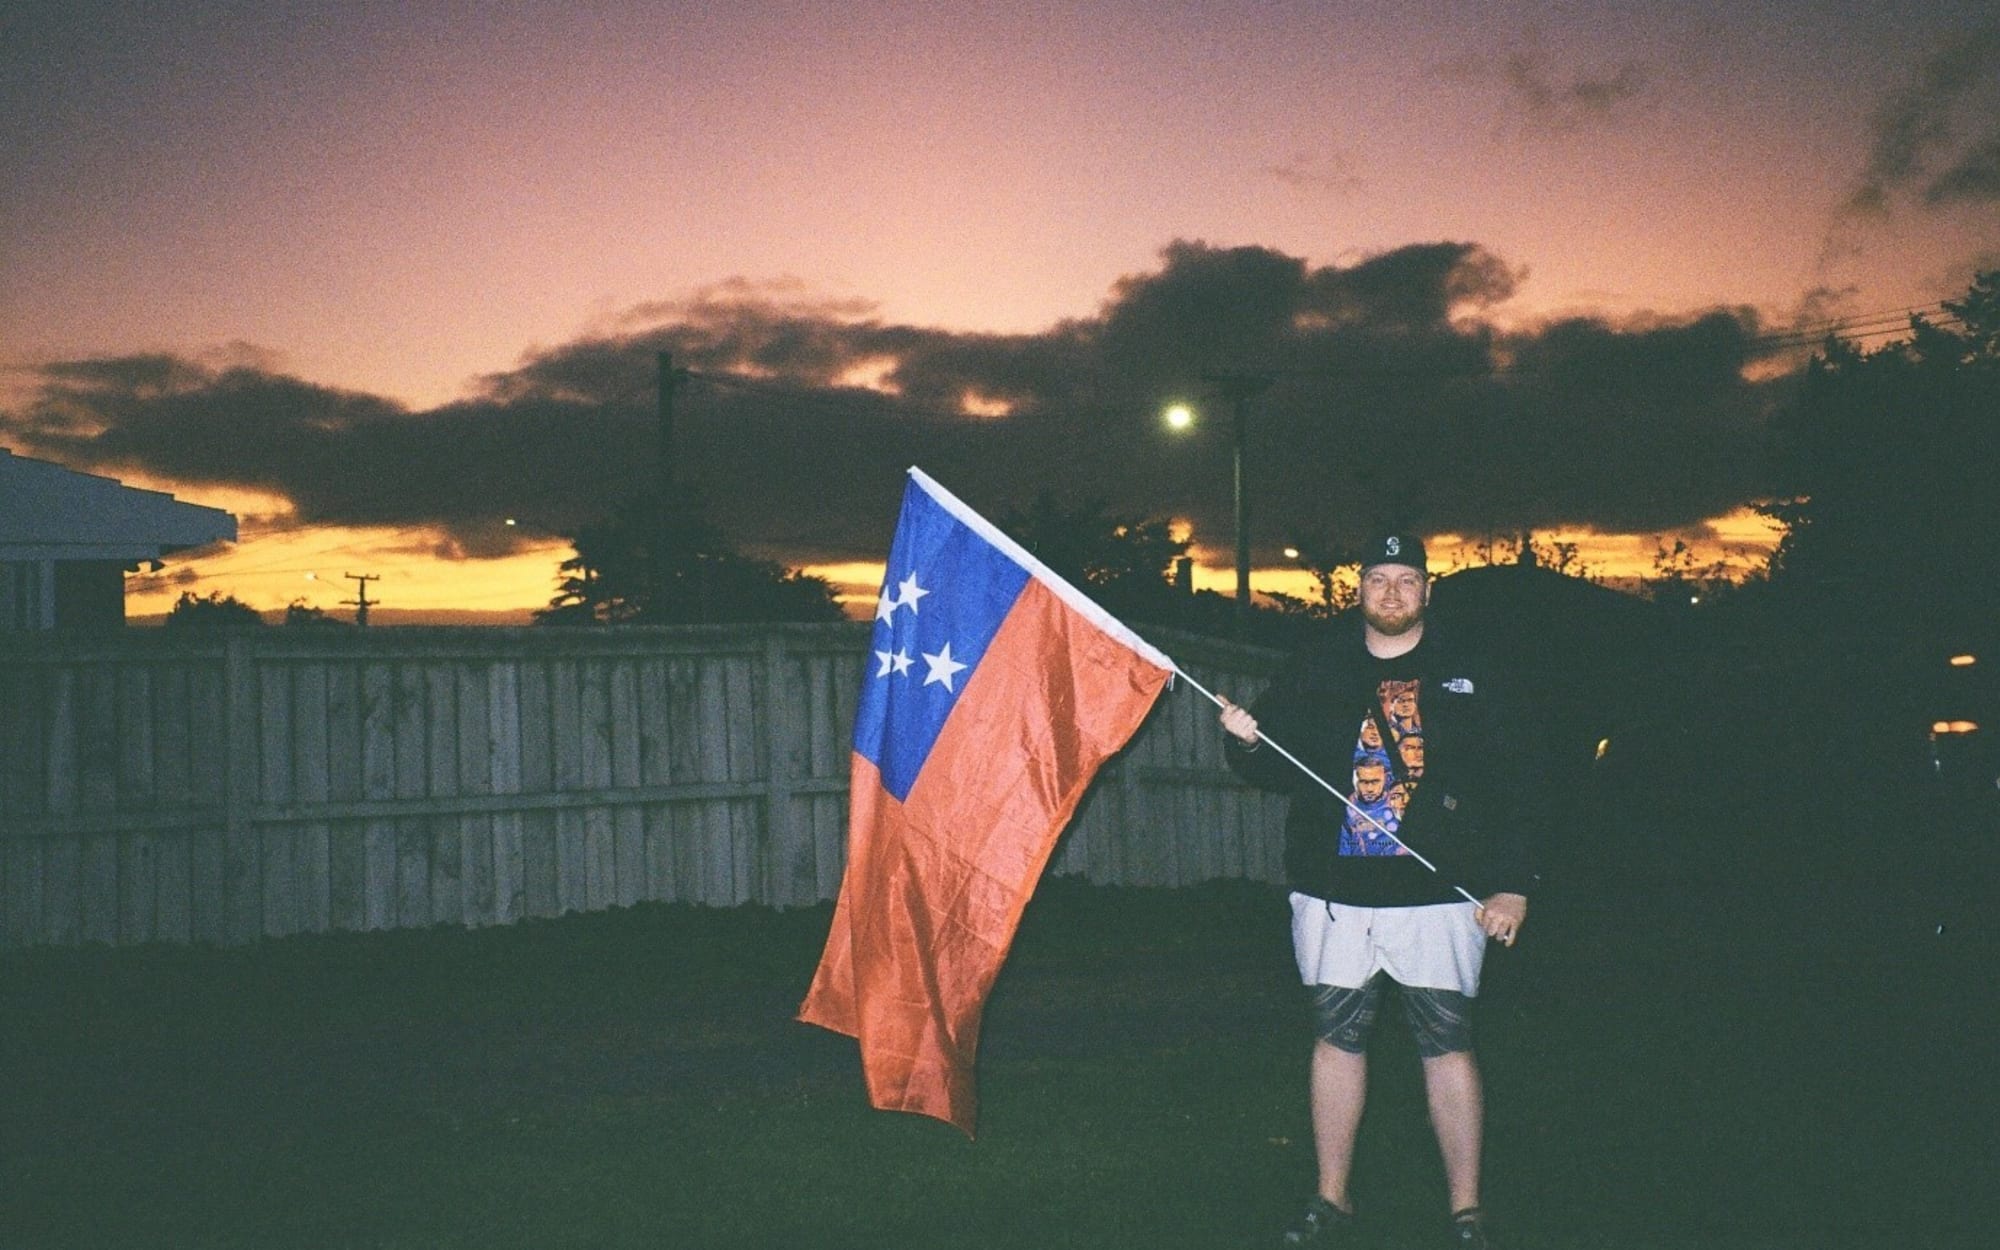 So'omalo Iteni Schwalger with a Samoan flag.